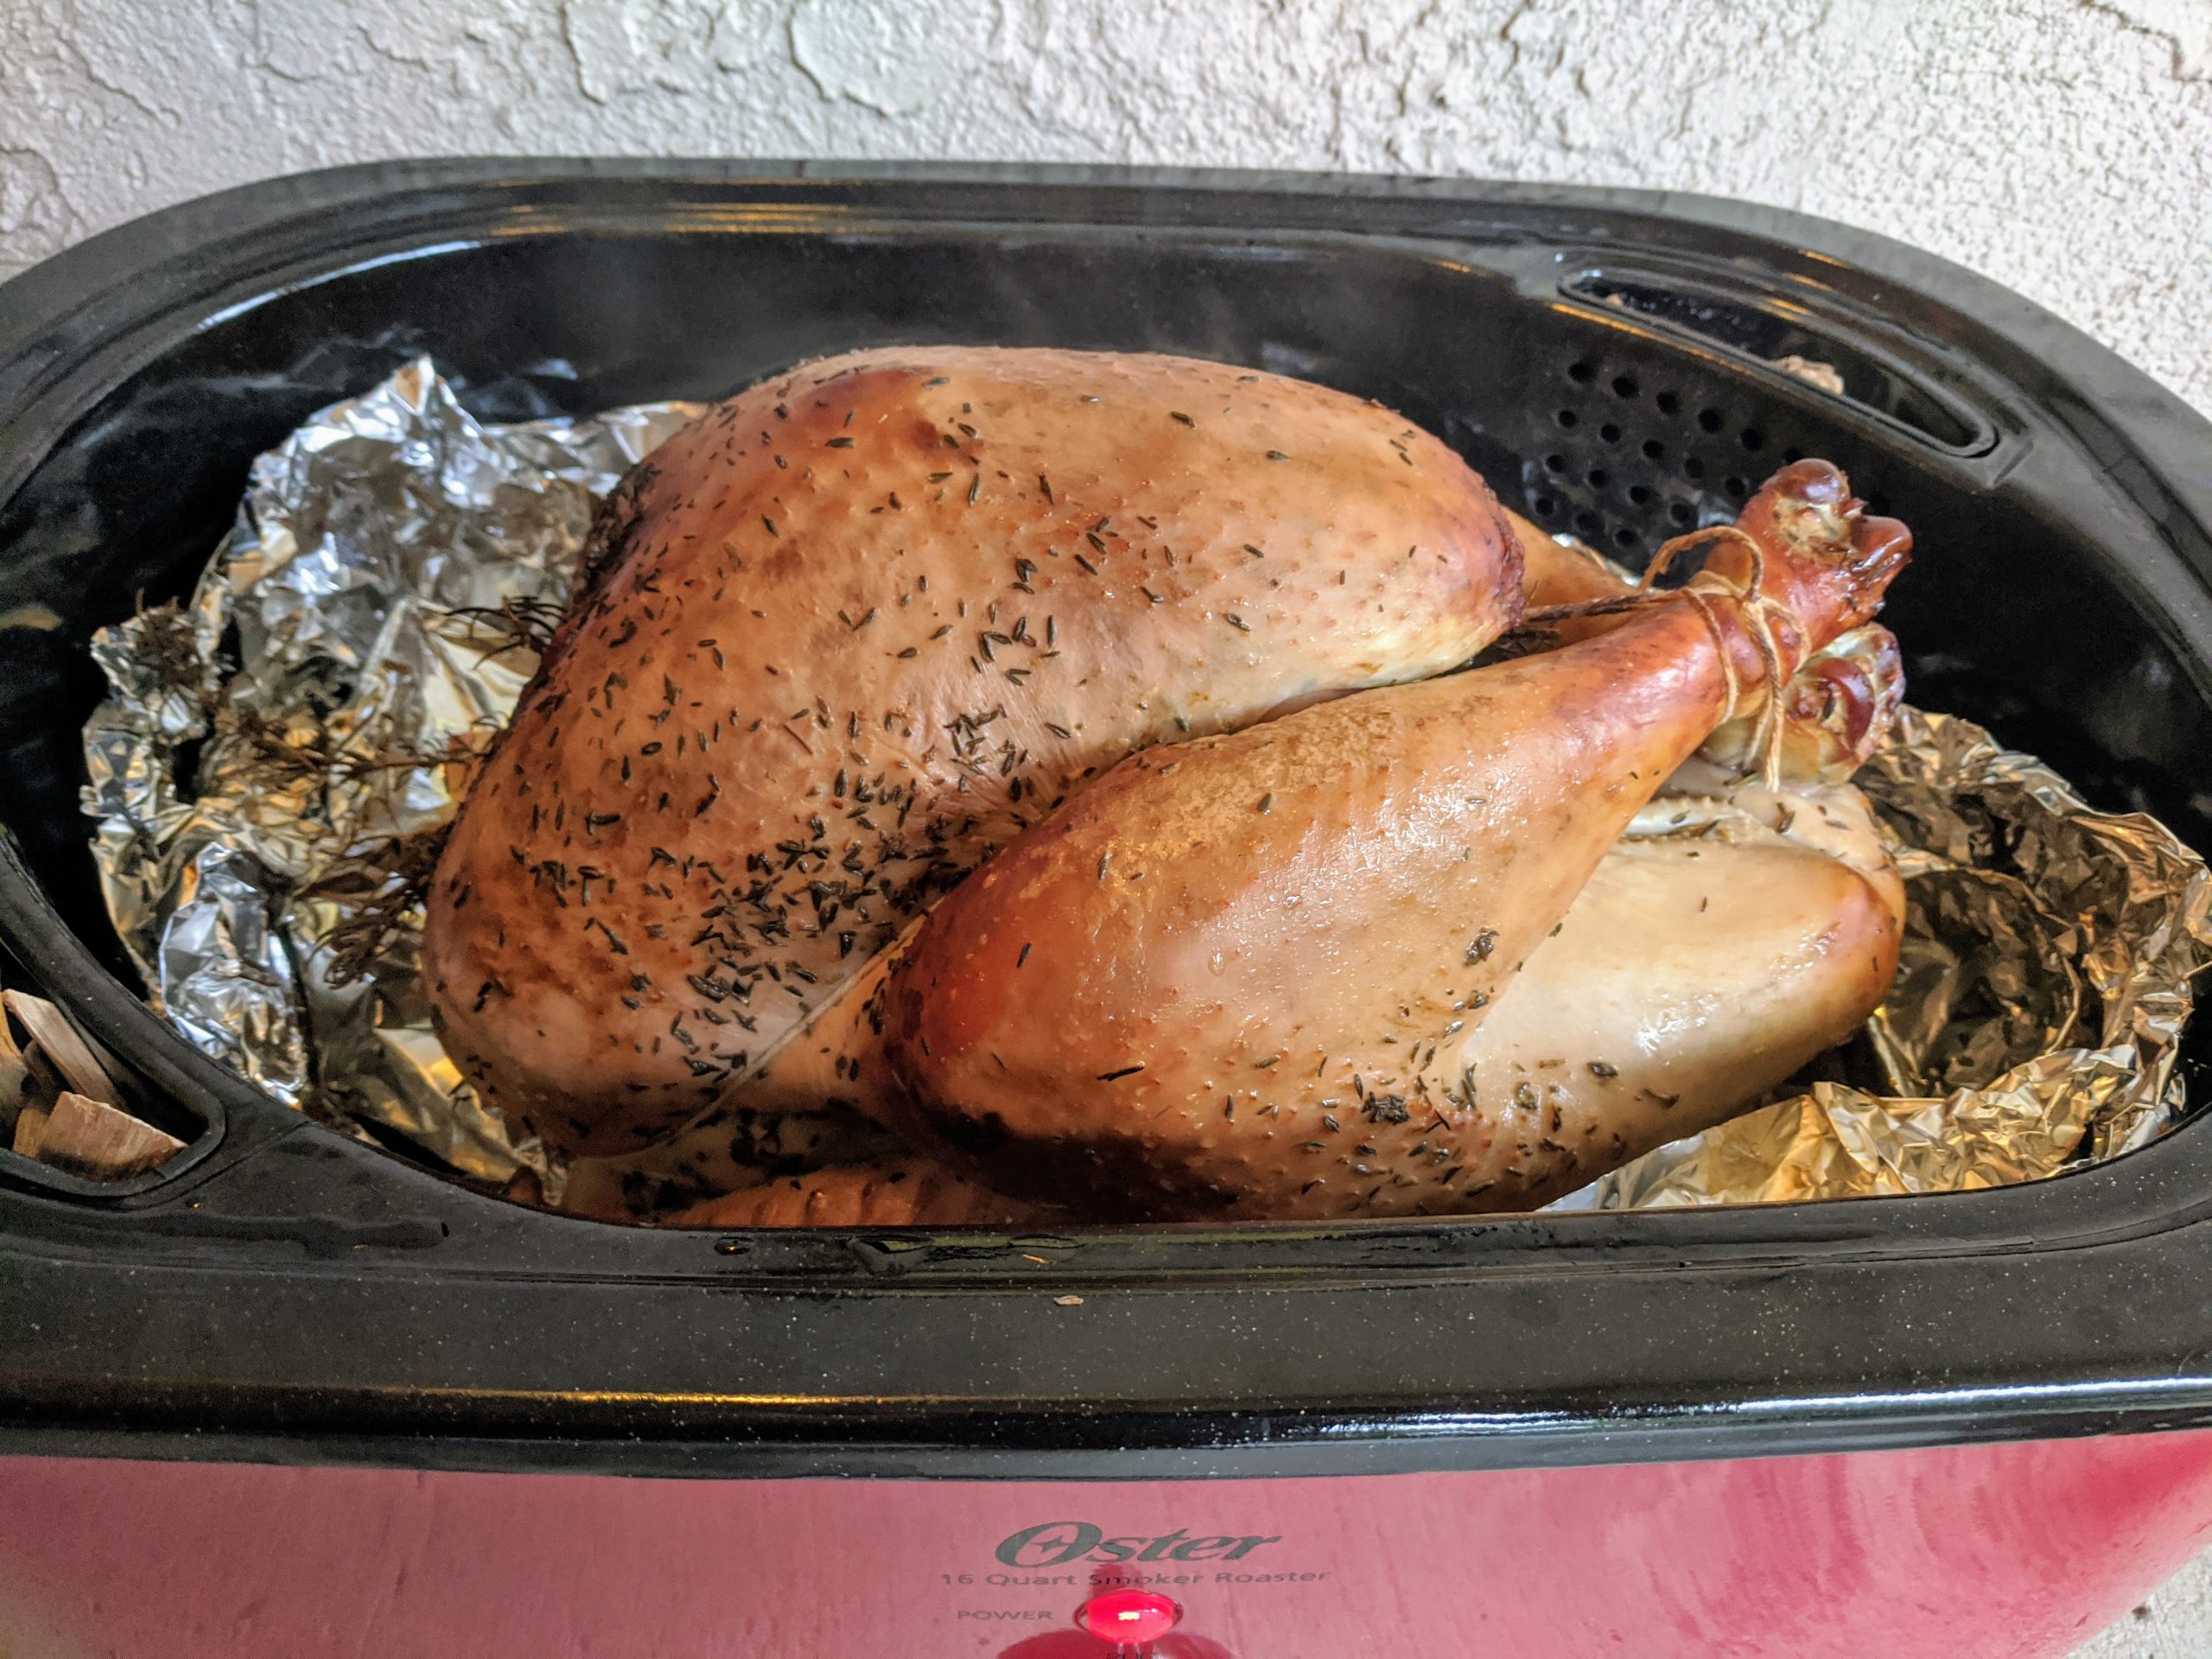 Pecan smoked roaster turkey made from this recipe